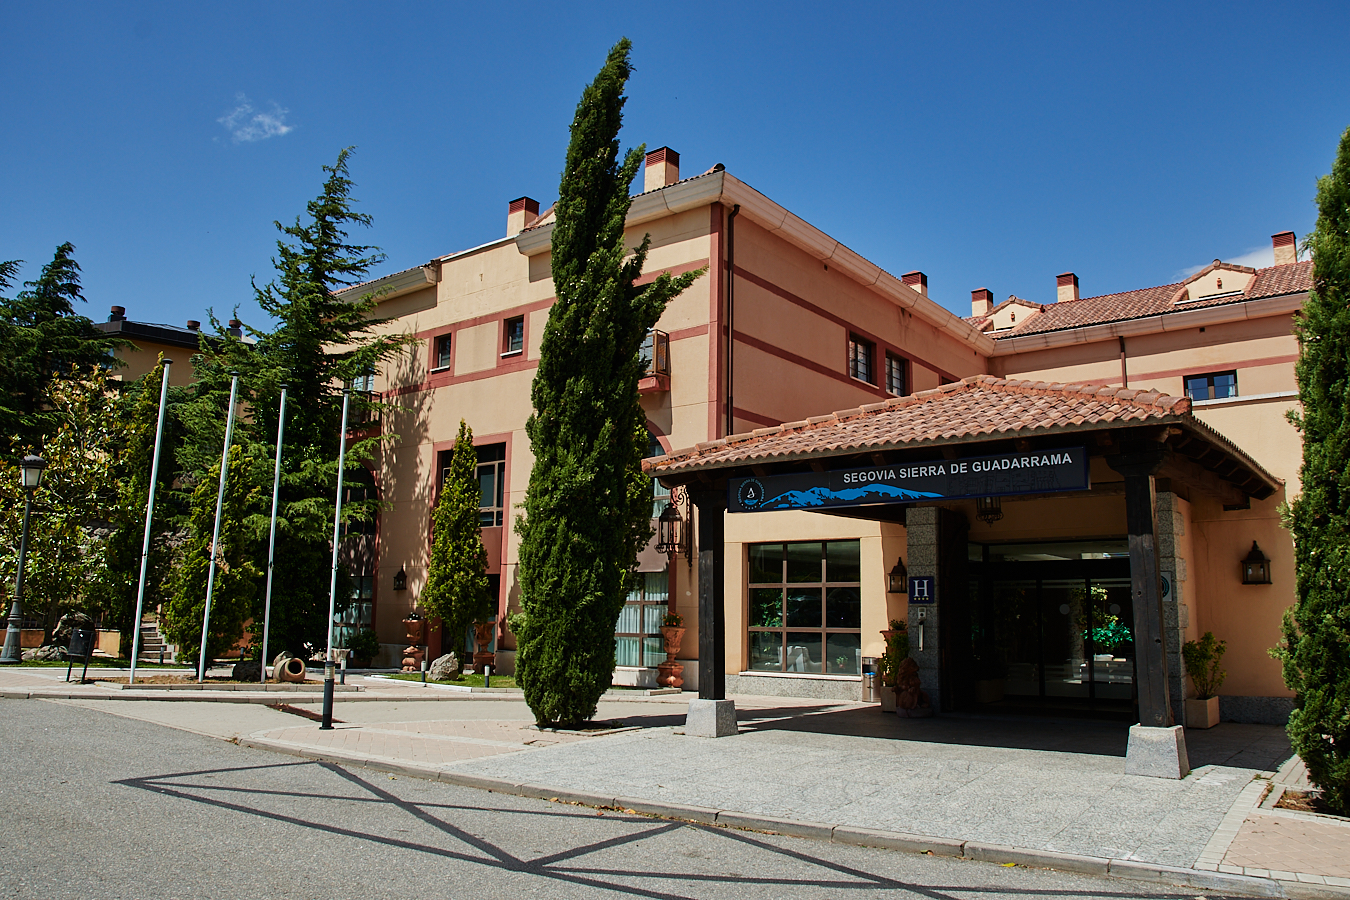 Hotel Segovia Sierra